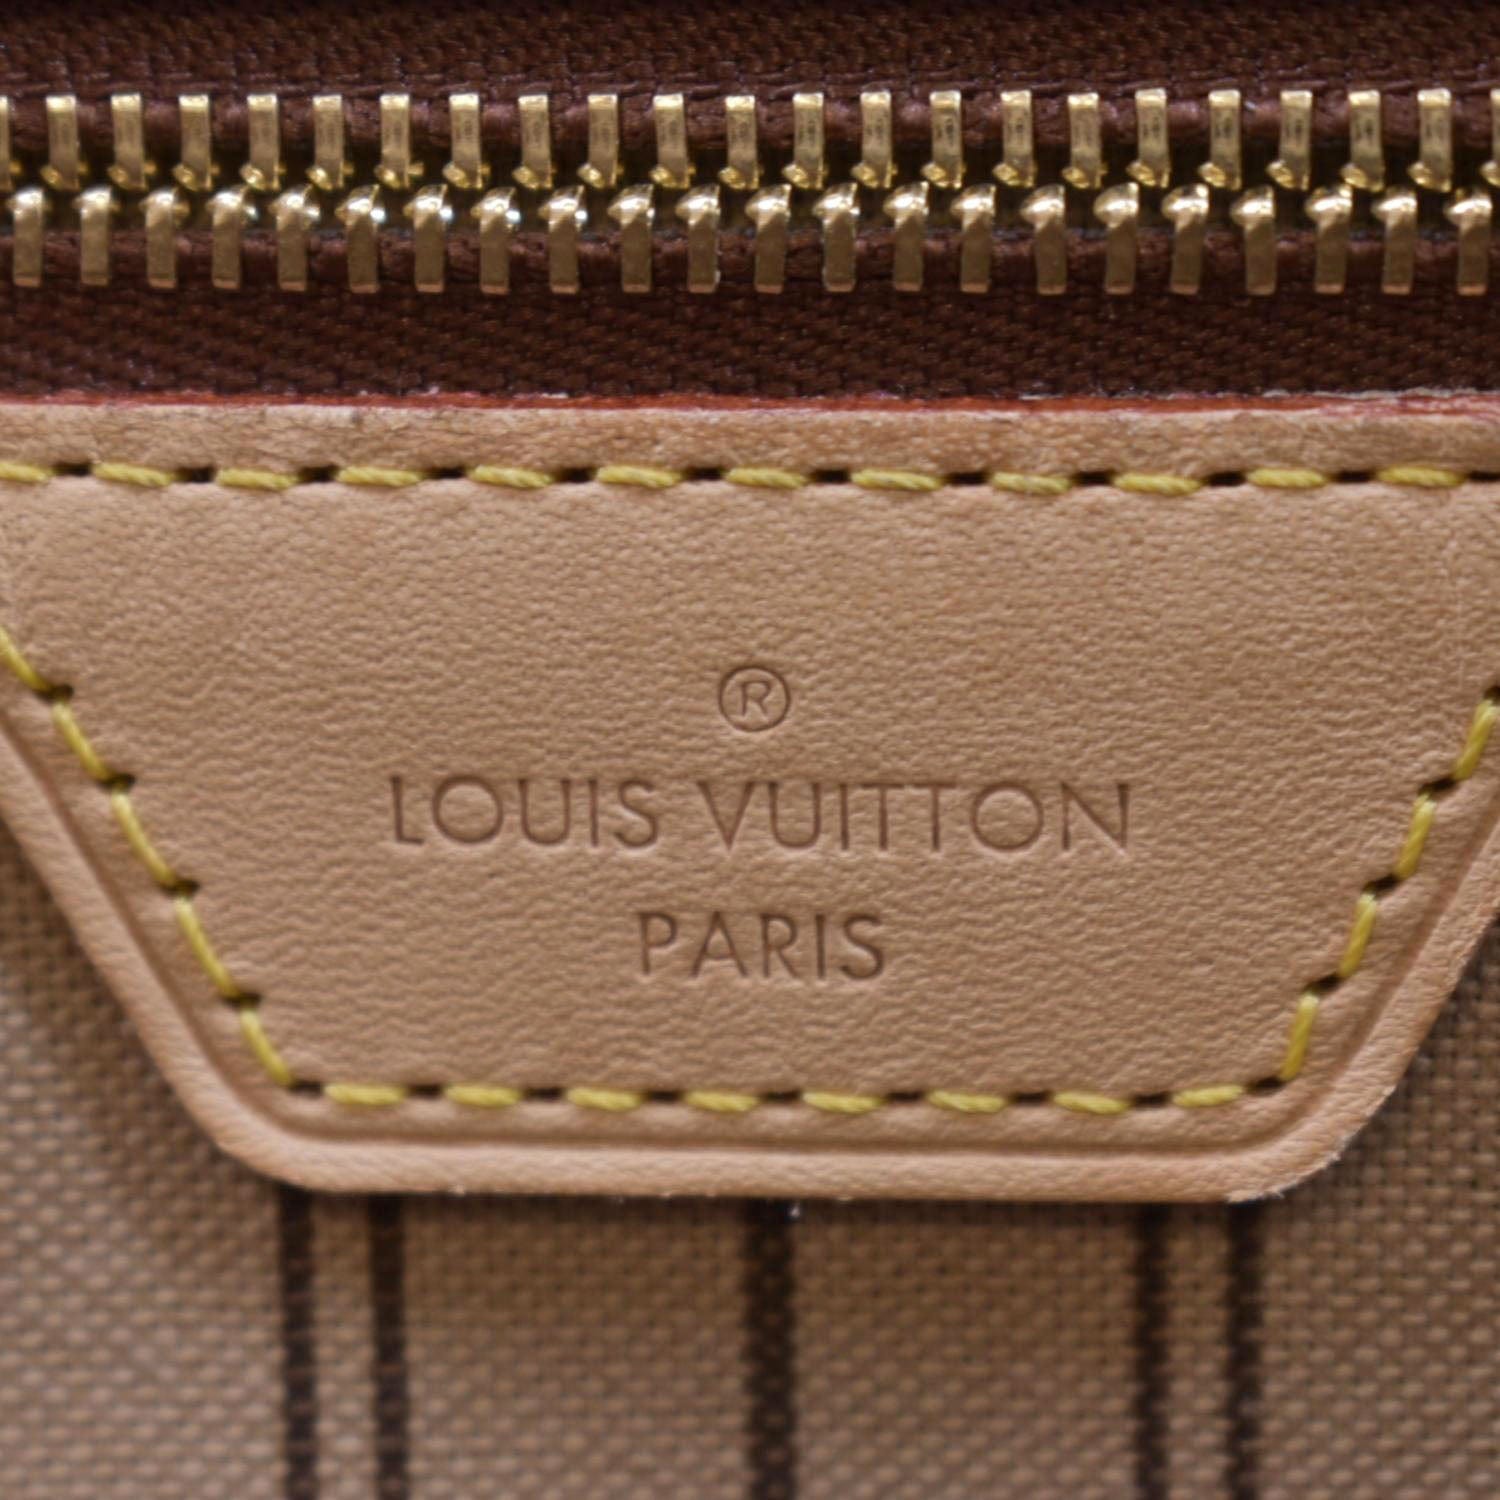 Louis Vuitton Neverfull GM Monogram Canvas Tote Bag Brown